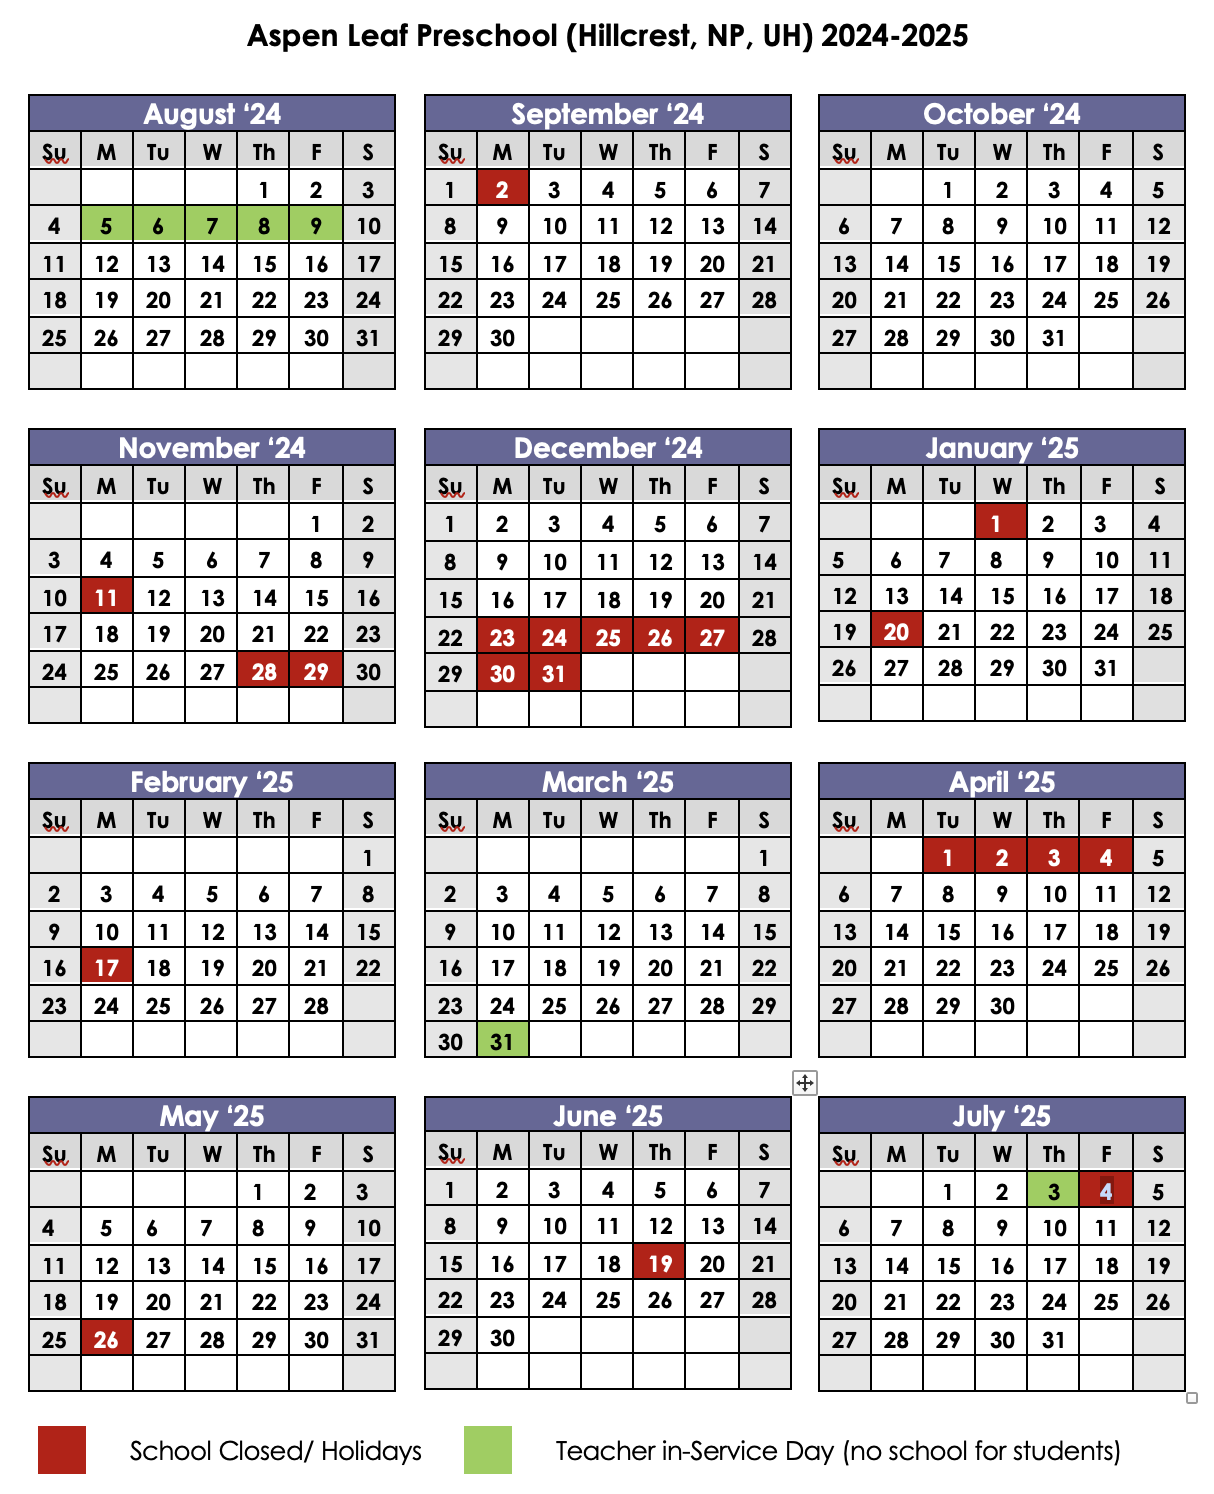 Aspen Leaf 2024-2025 academic calendar